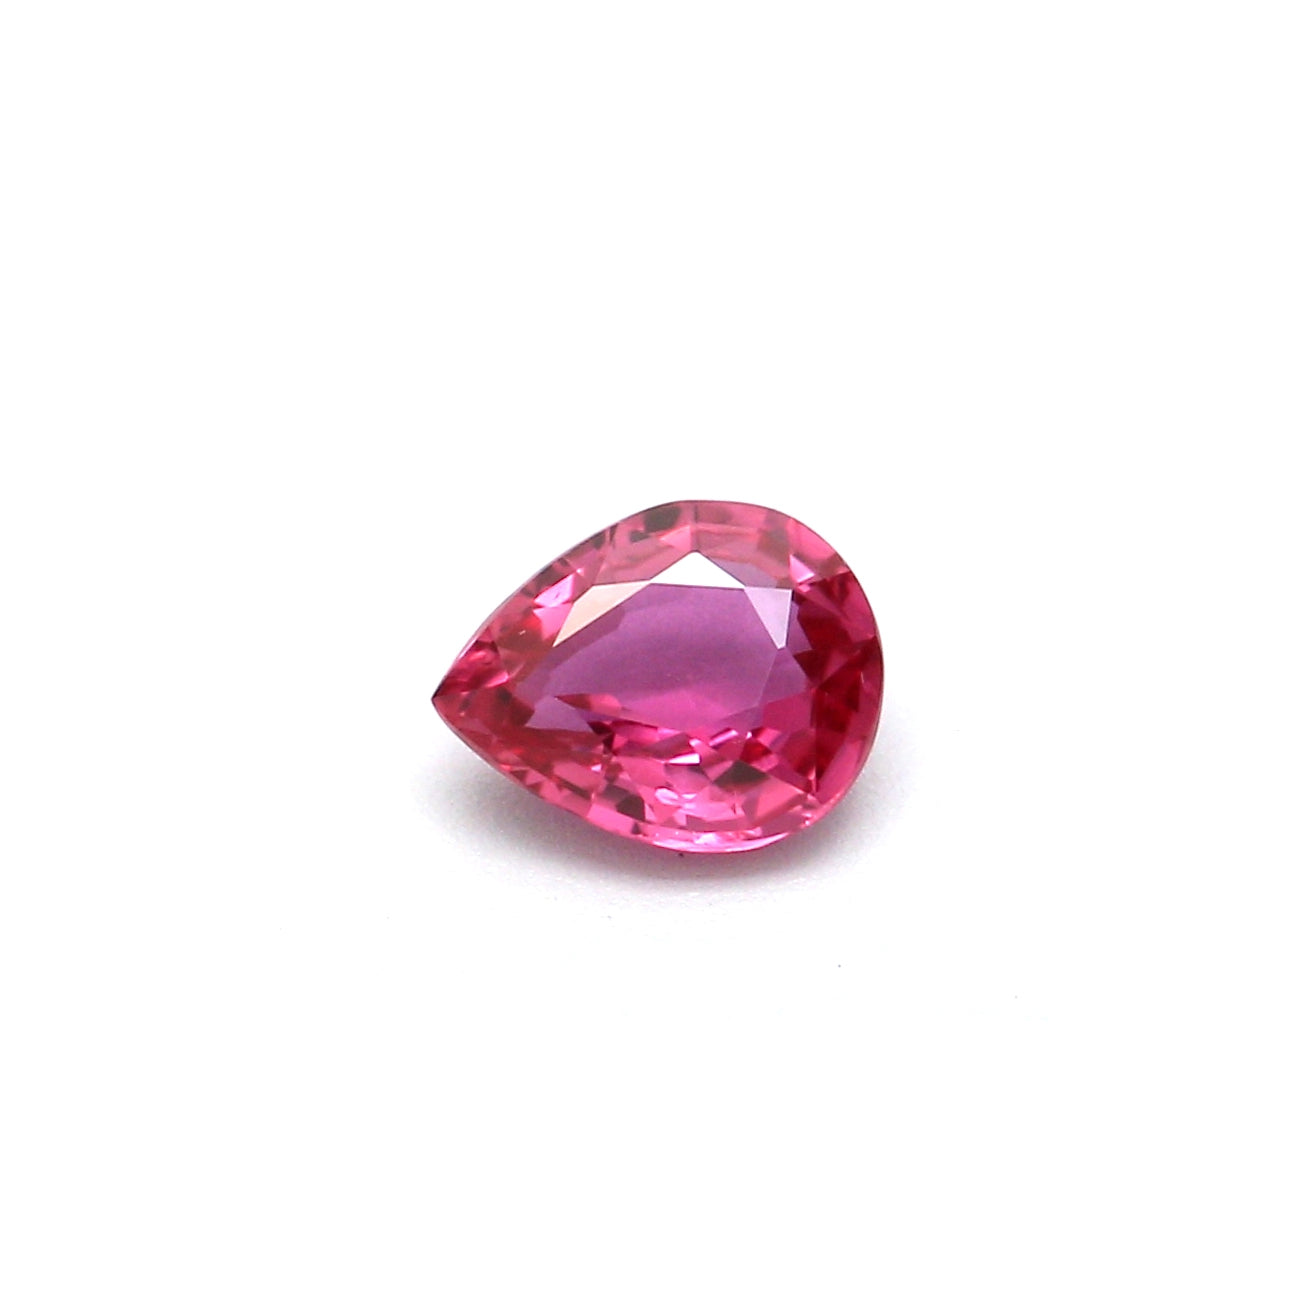 0.34ct Pink, Pear Shape Sapphire, Heated, Thailand - 4.98 x 3.94 x 2.11mm